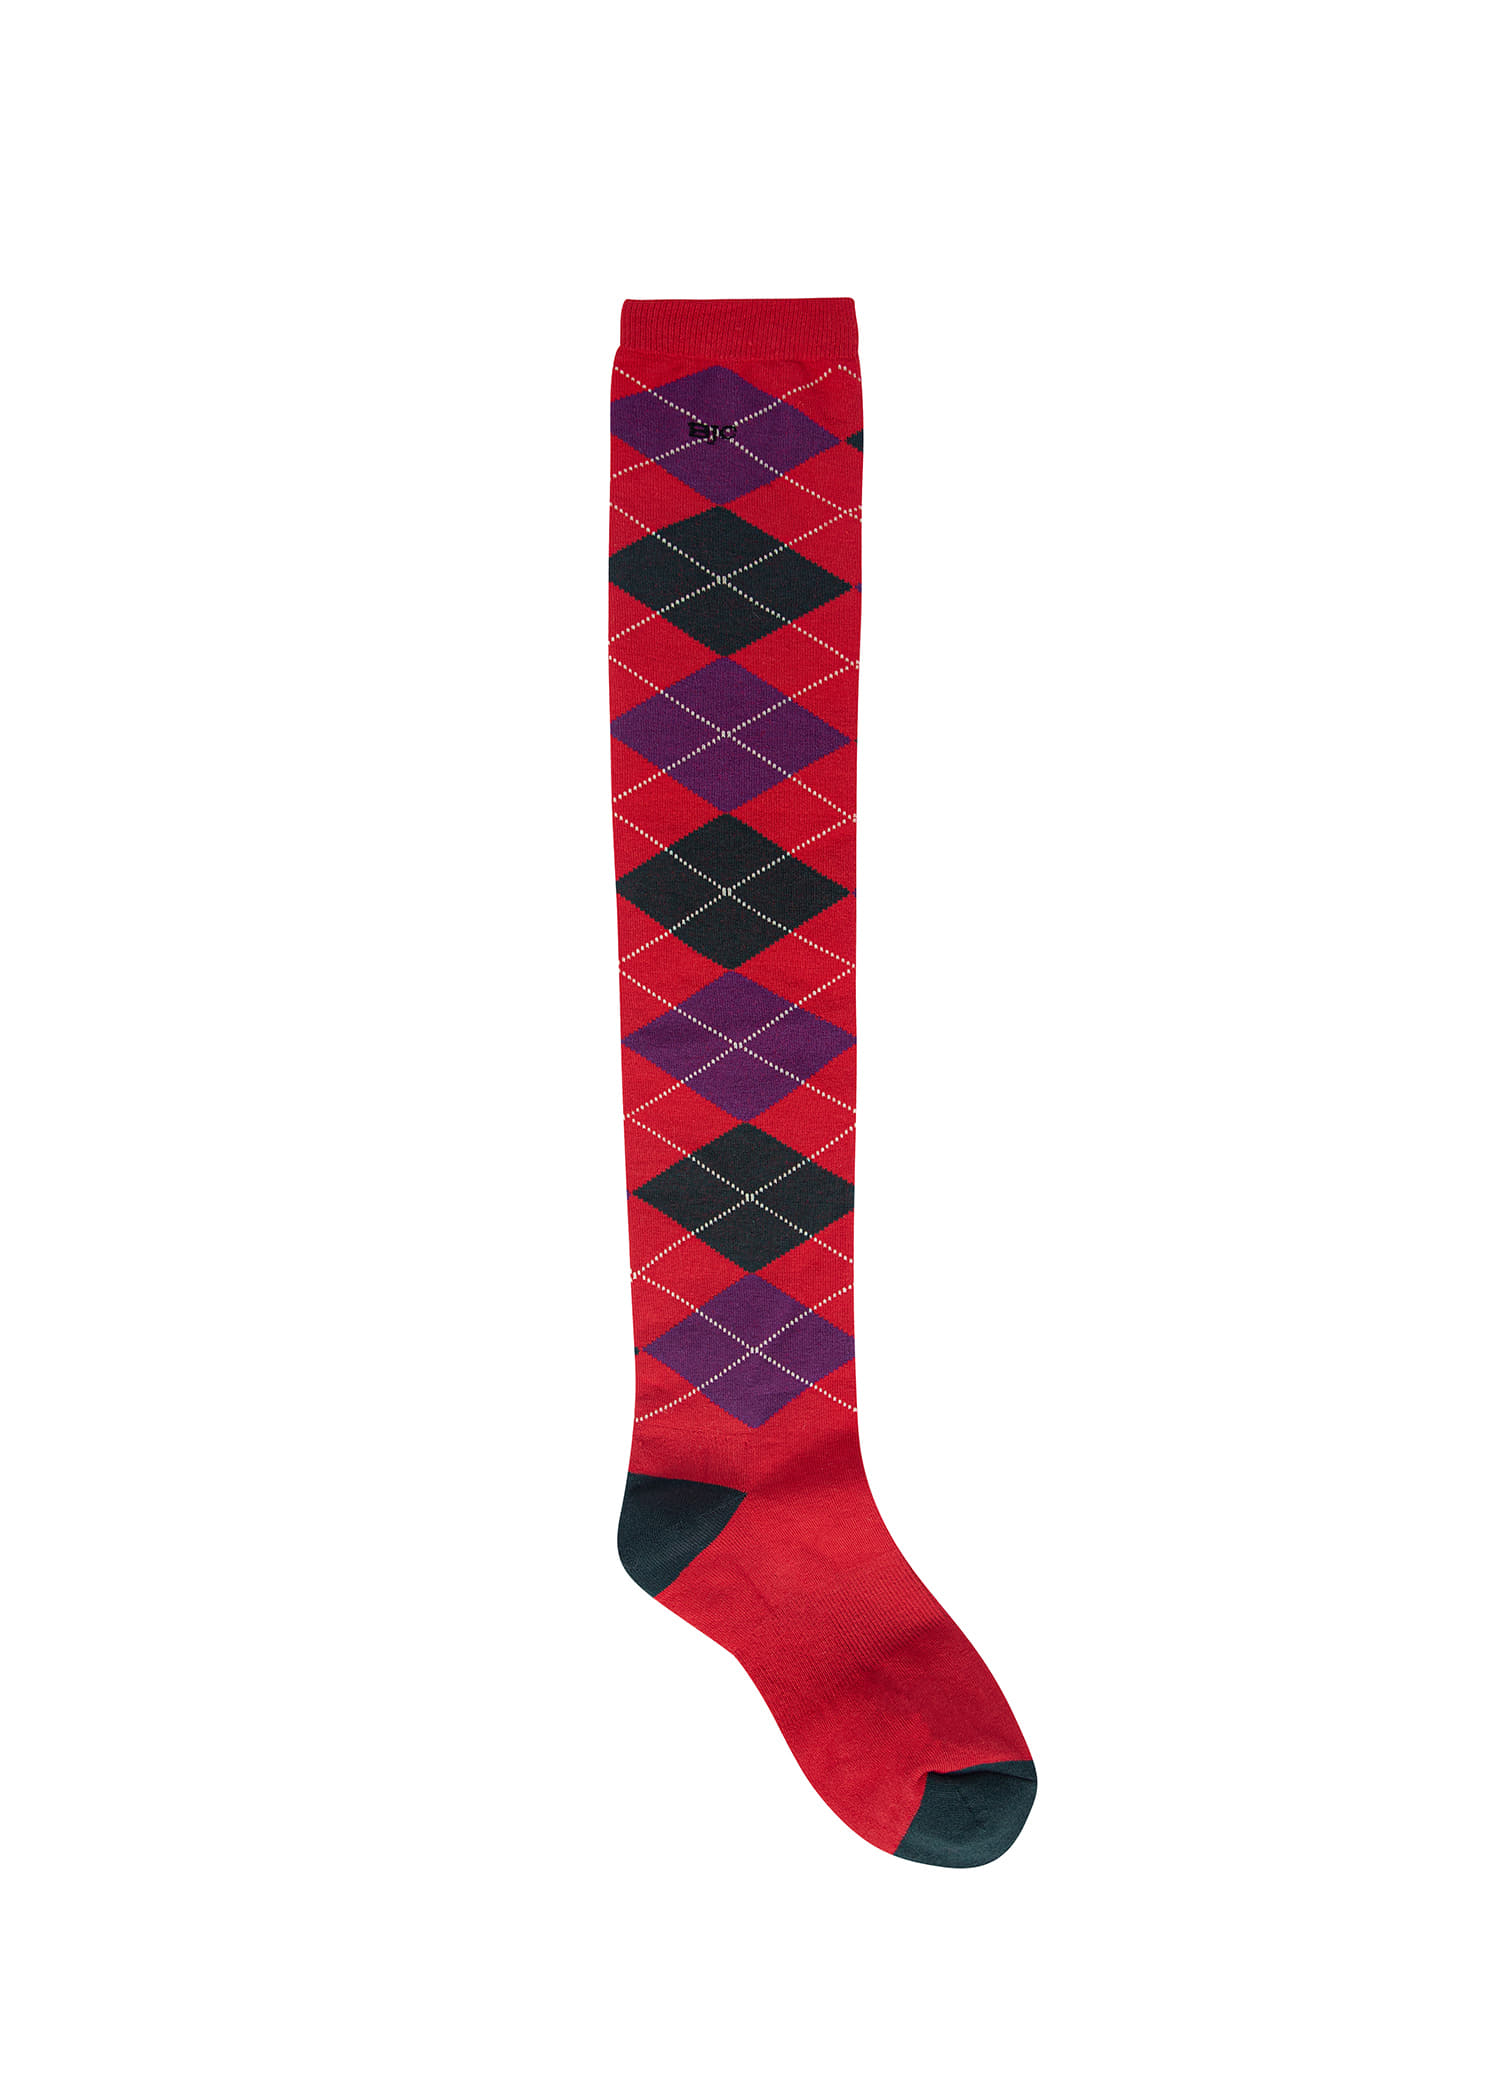 BJC argyle pattern socks